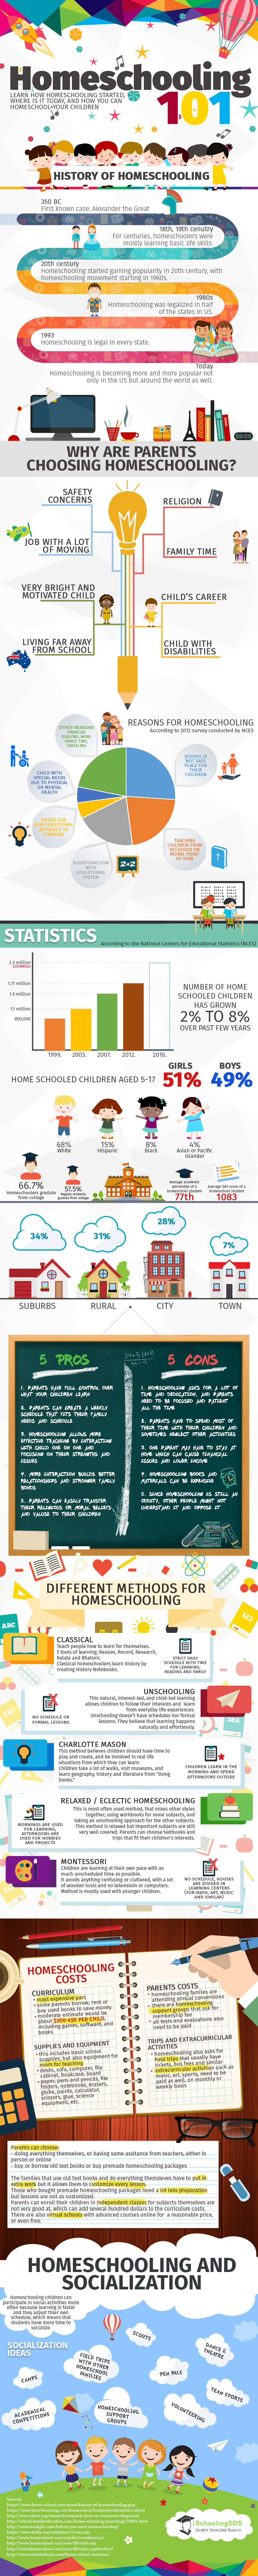 Homeschooling infographic